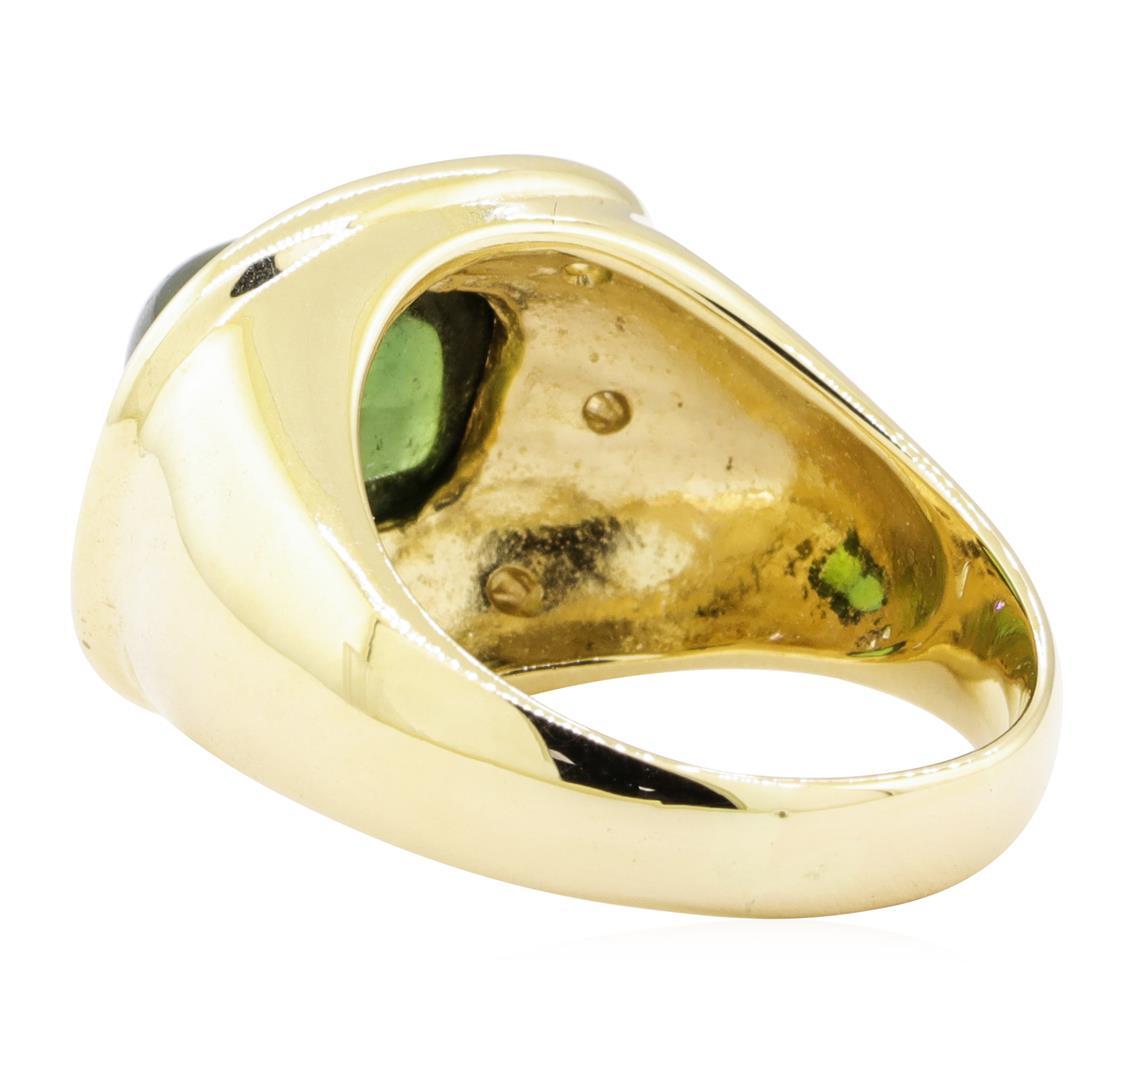 6.40 ctw Green Tourmaline And Diamond Ring - 14KT Yellow Gold